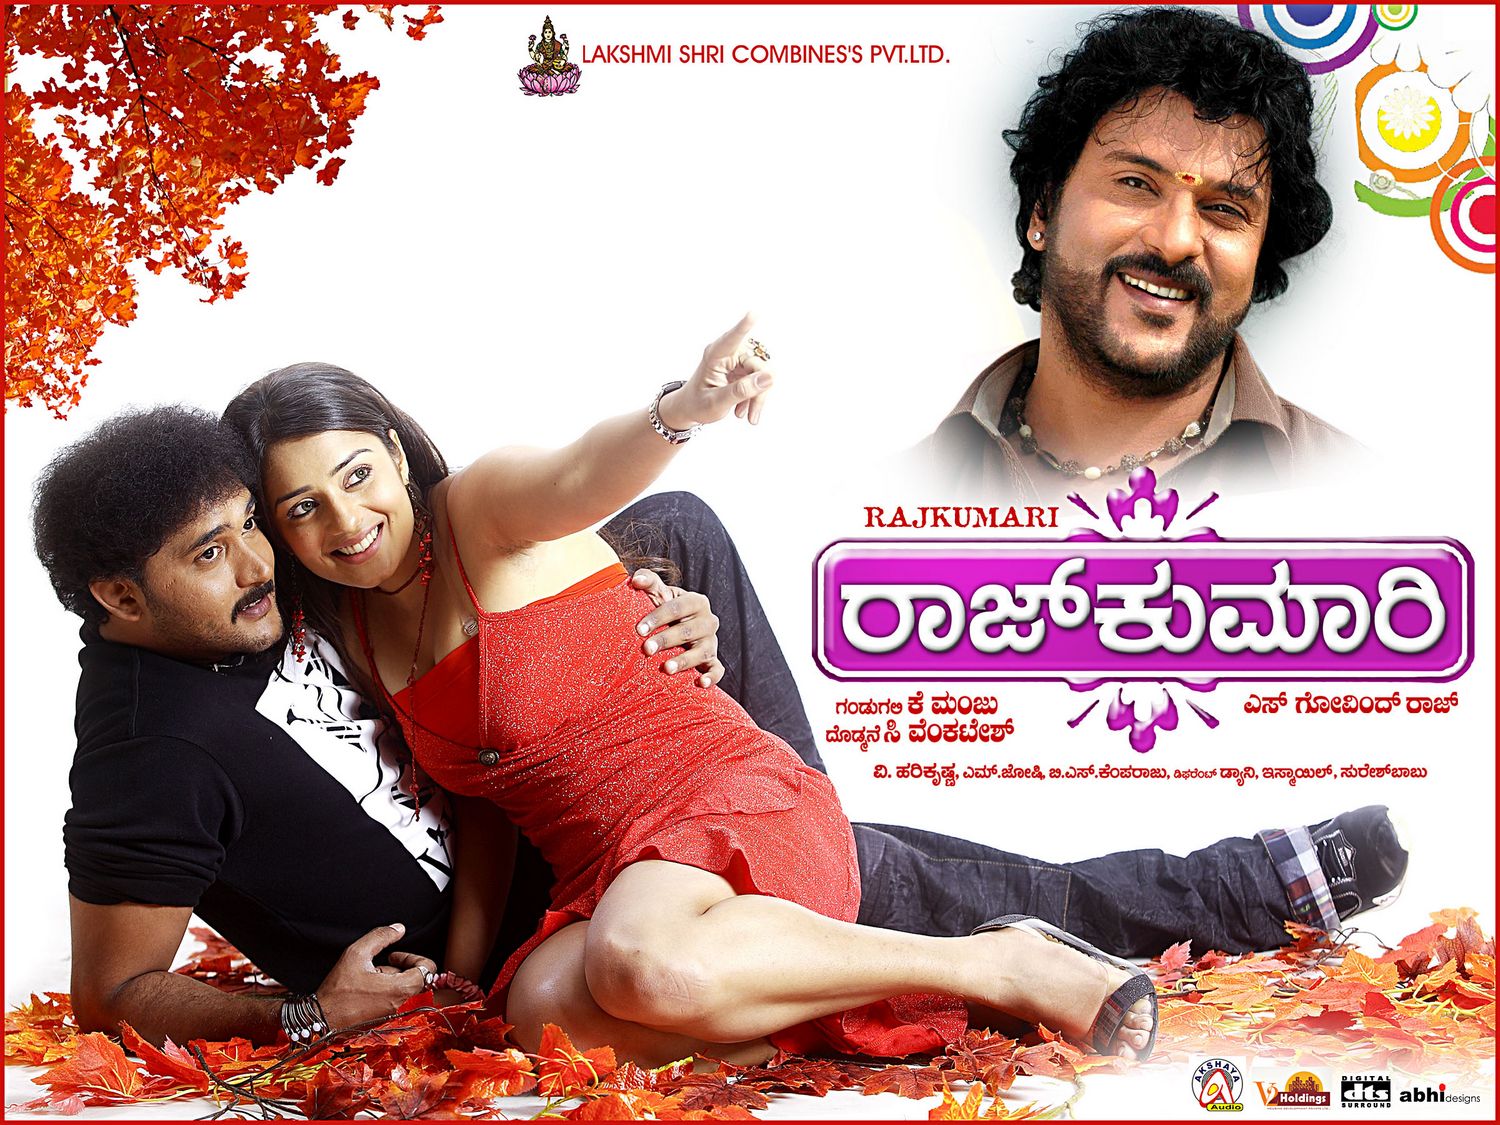 Extra Large Movie Poster Image for Rajkumari (#19 of 20)